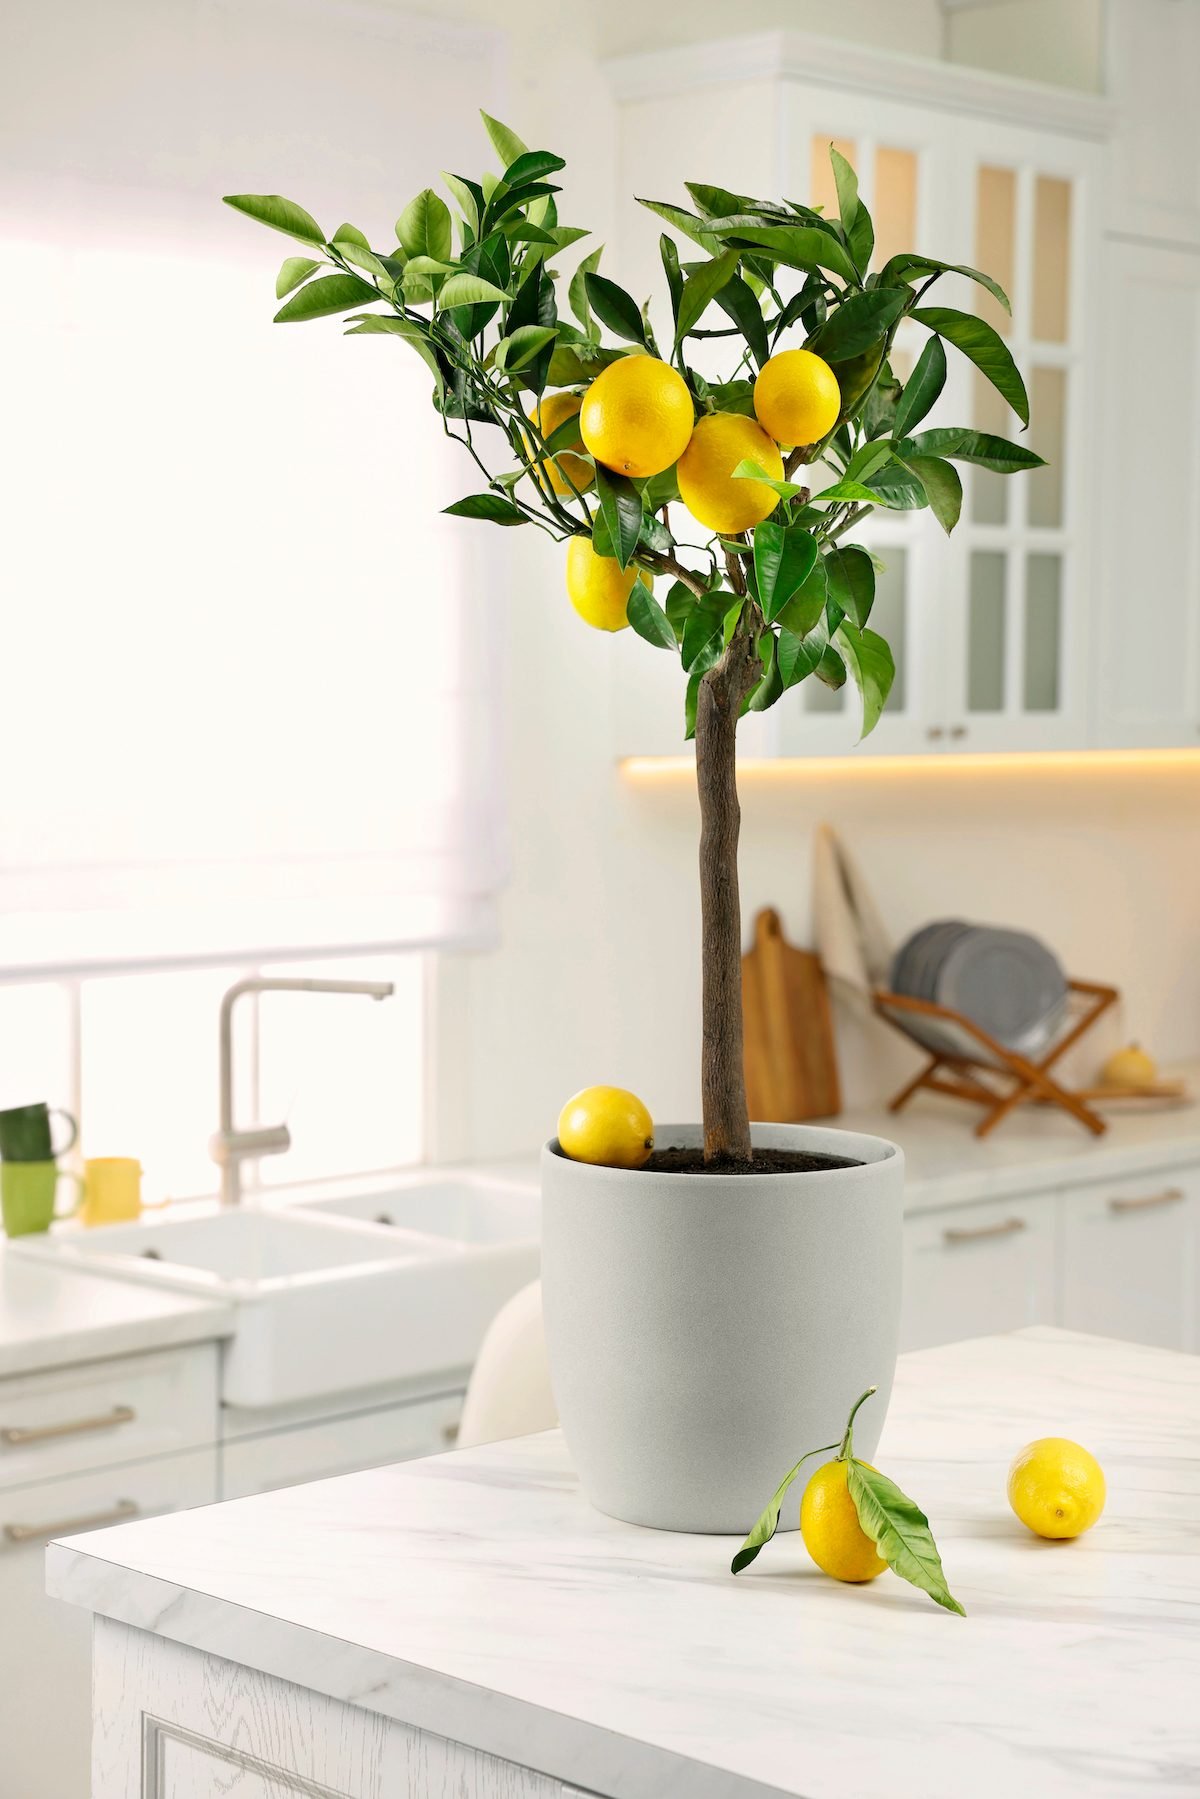 to Grow an Indoor Lemon Tree and